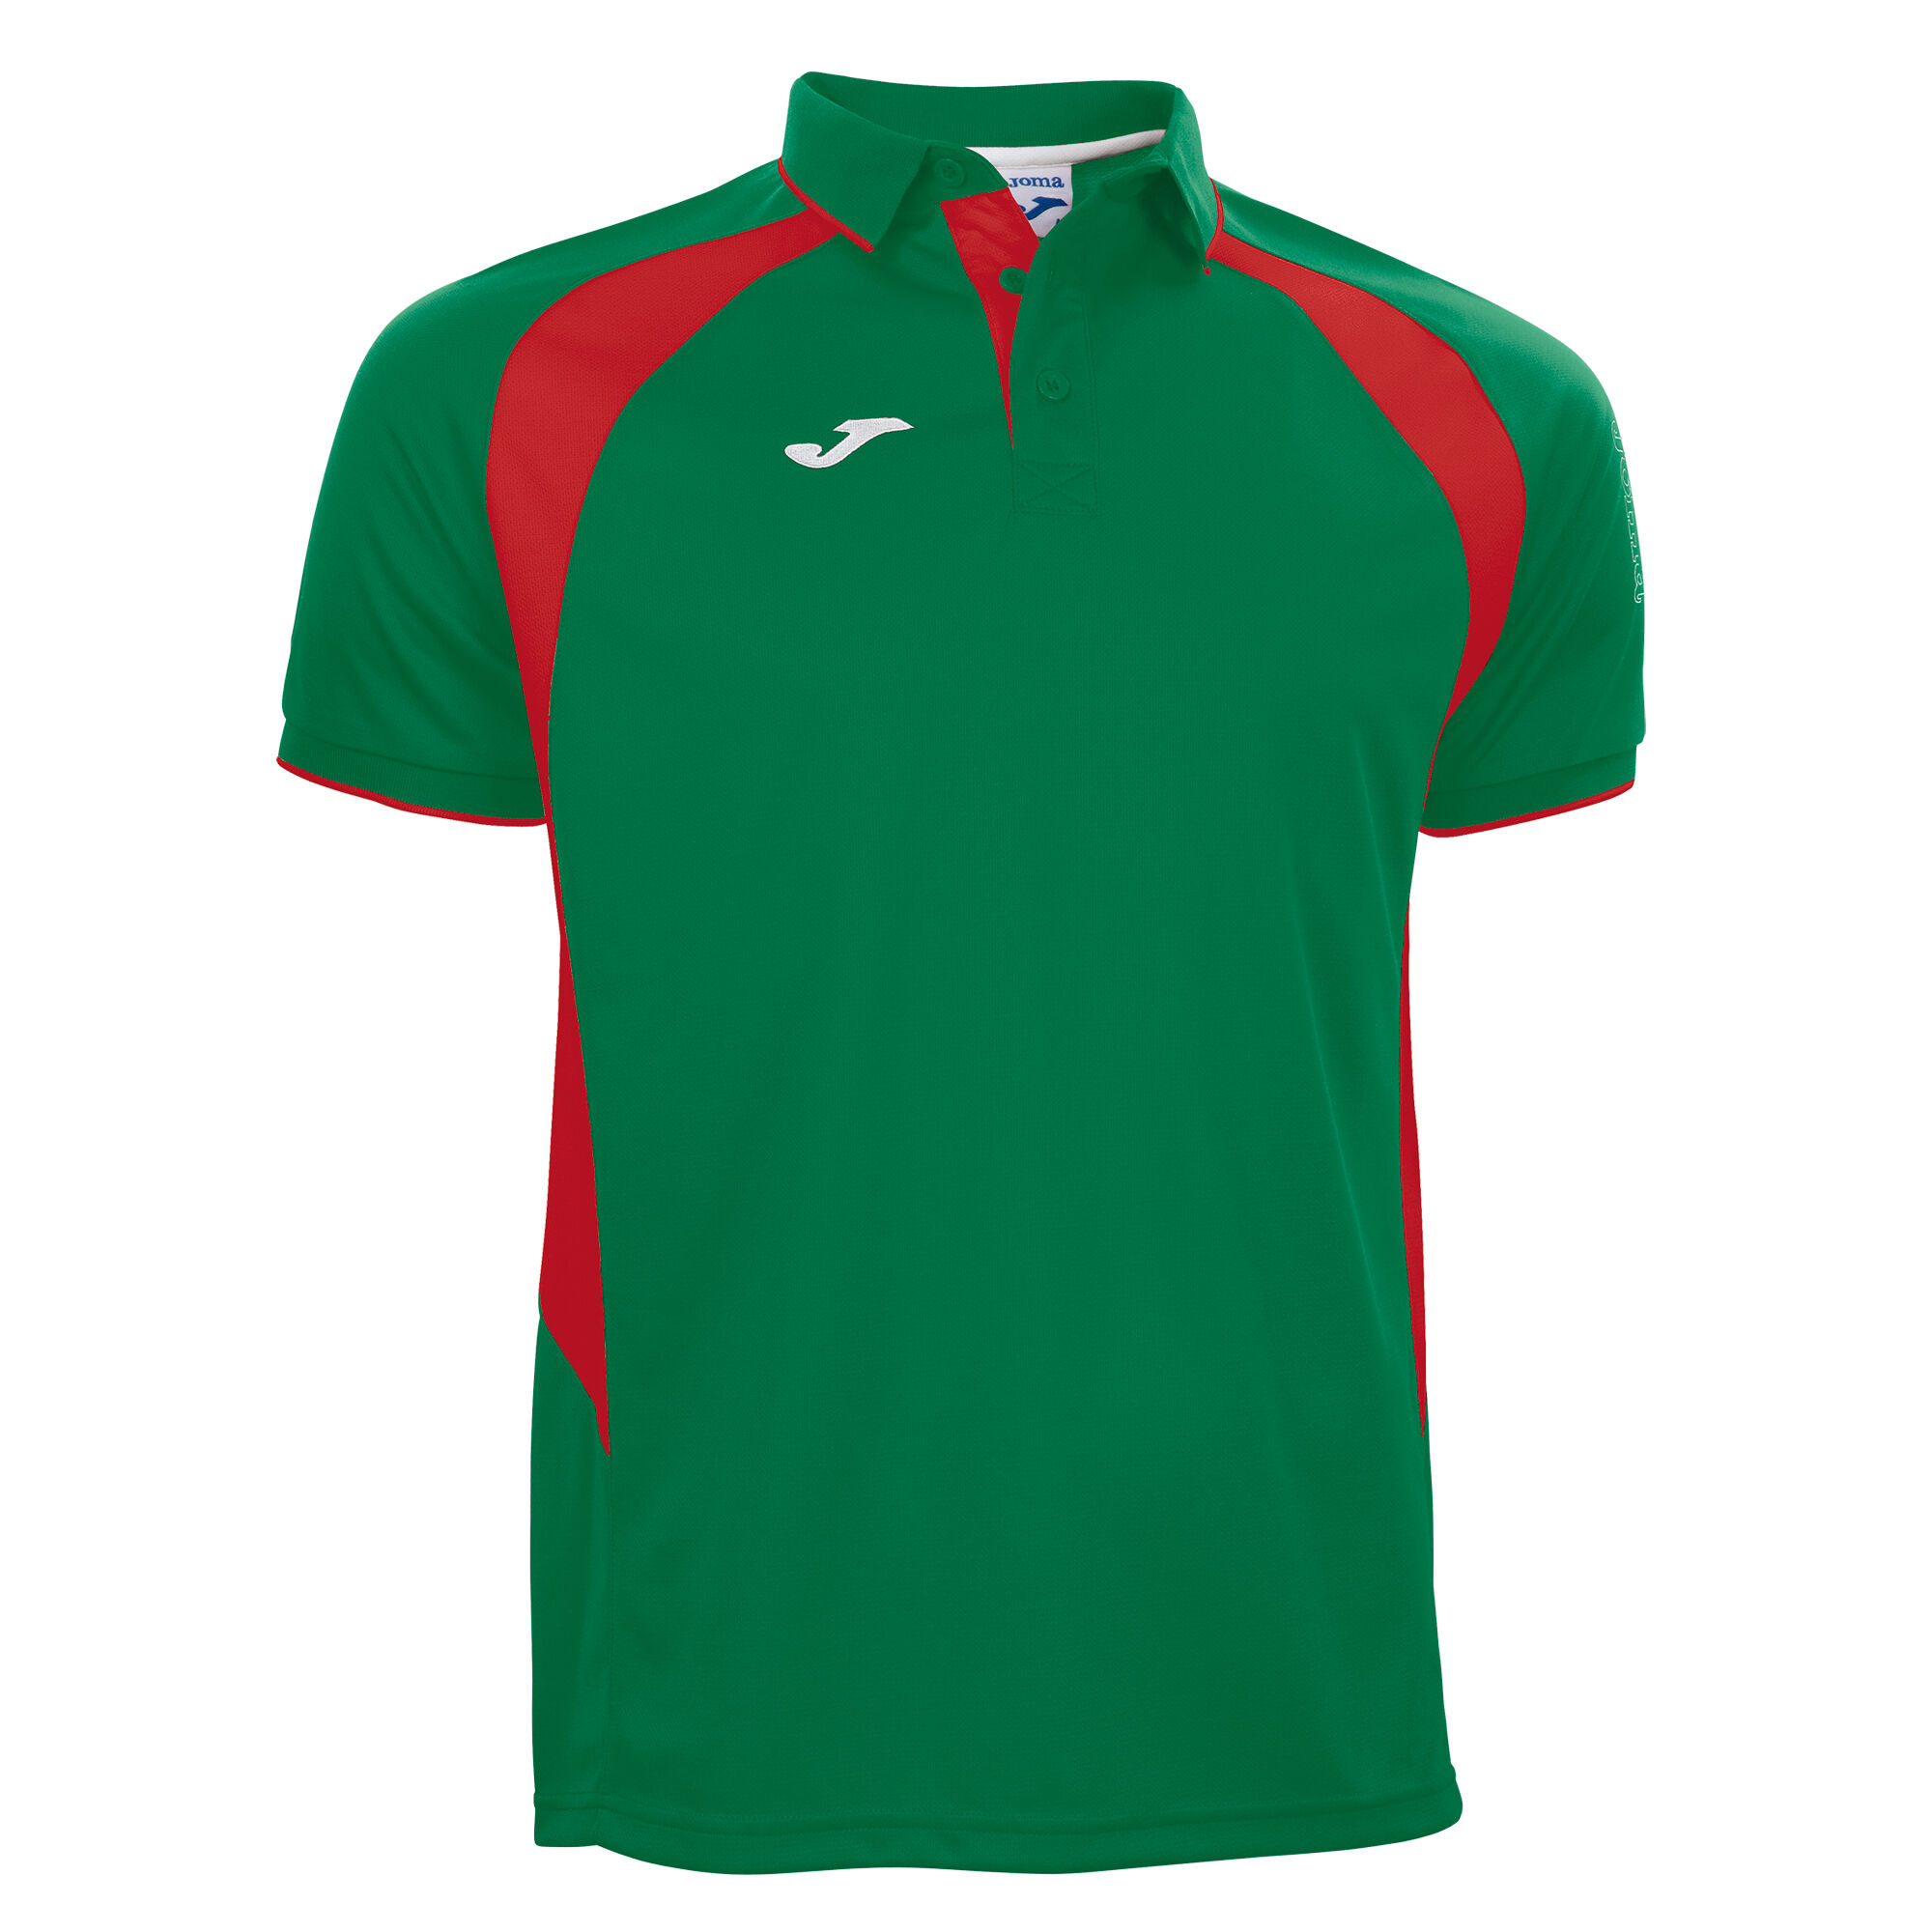 Polo shirt short-sleeve man Championship green red